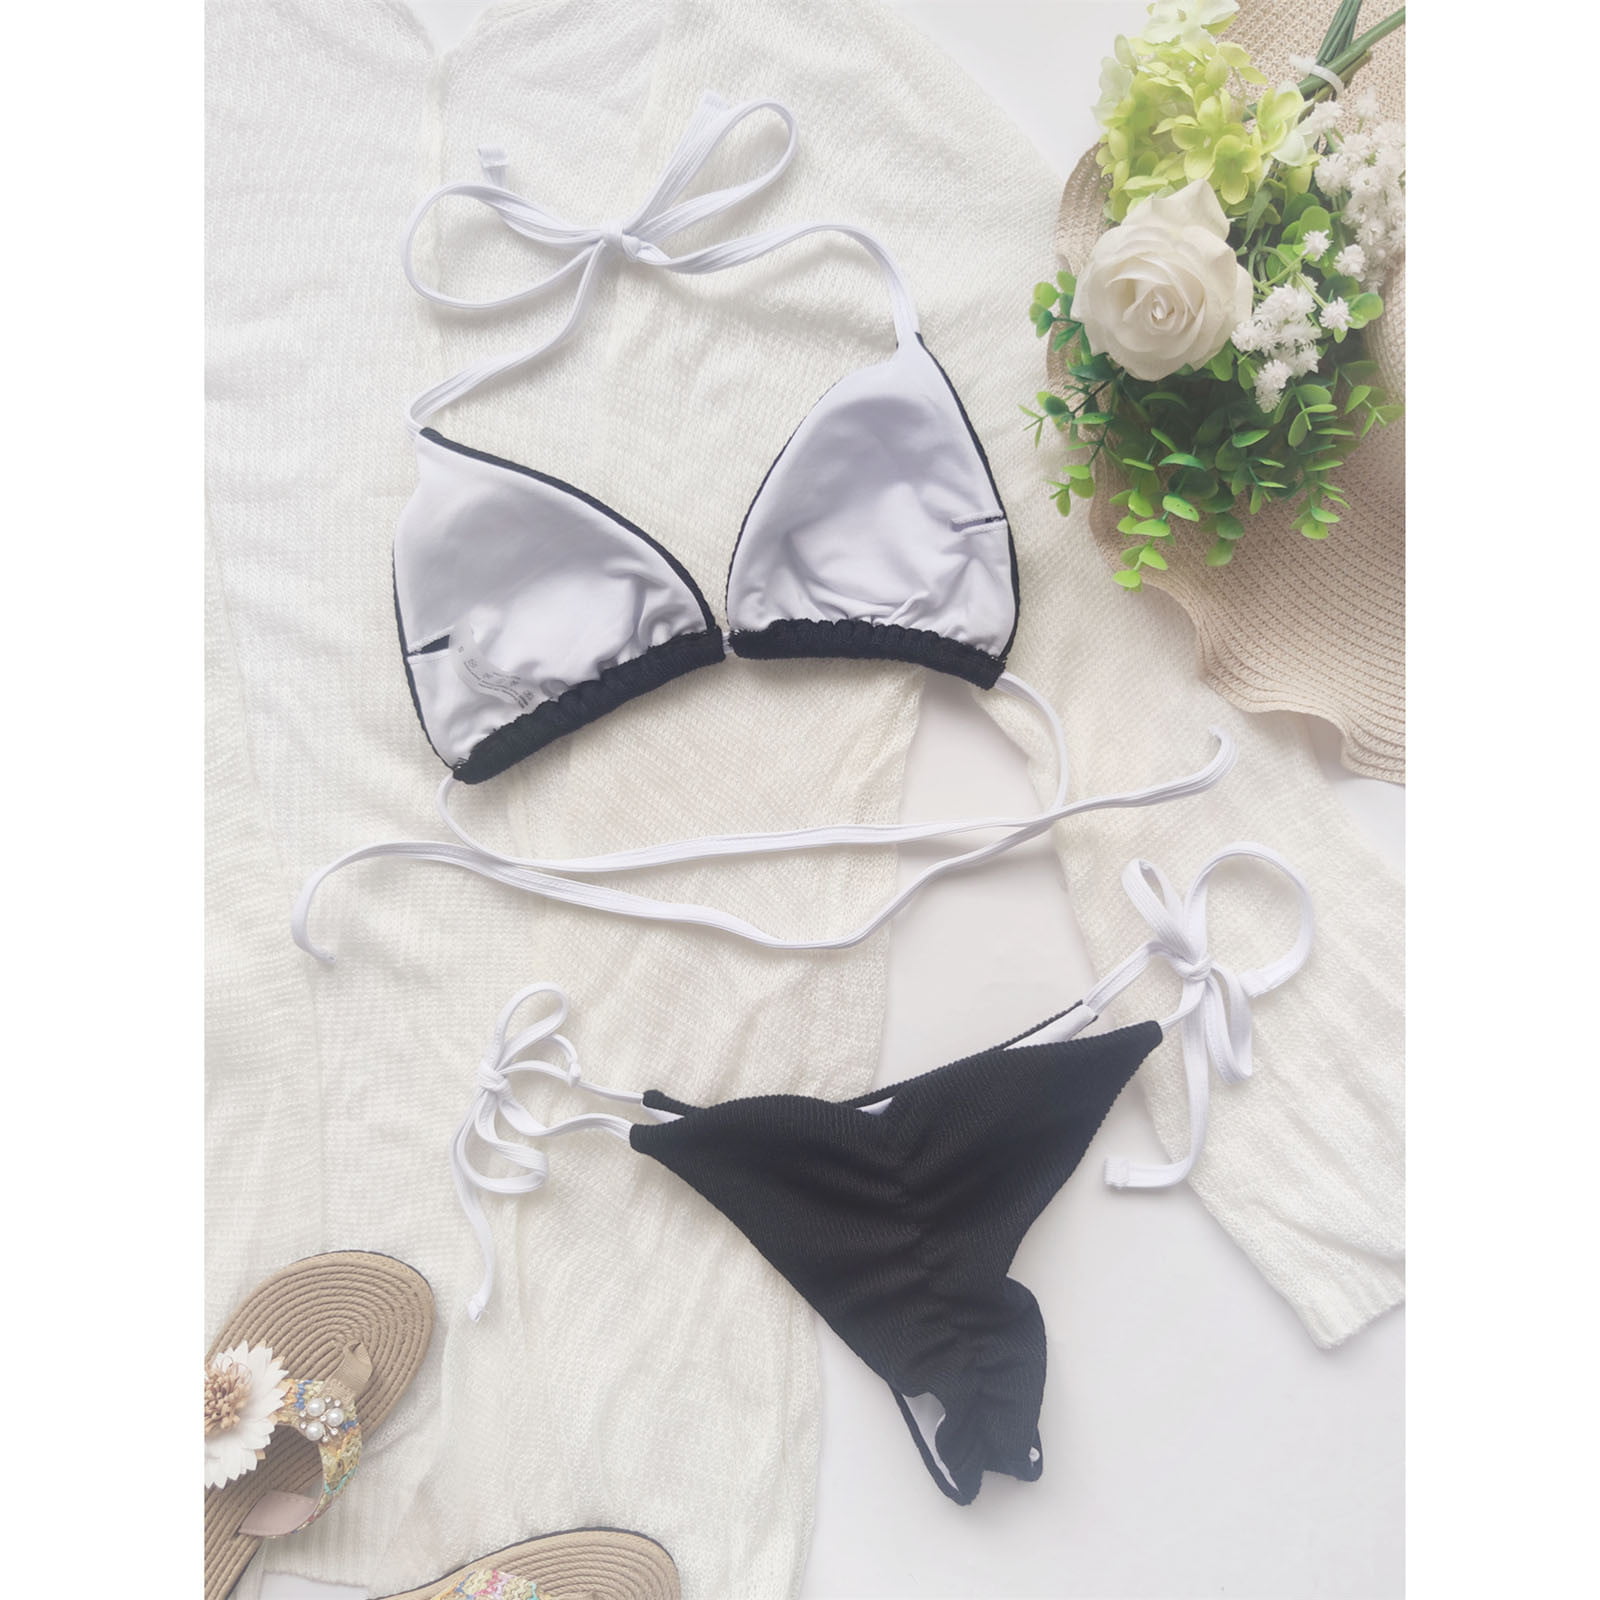 Buy Fascigirl Women's Swimsuit Fashion Sexy Padded Push up Bathing Suits  2-Piece Bikini Set (White_Medium) at